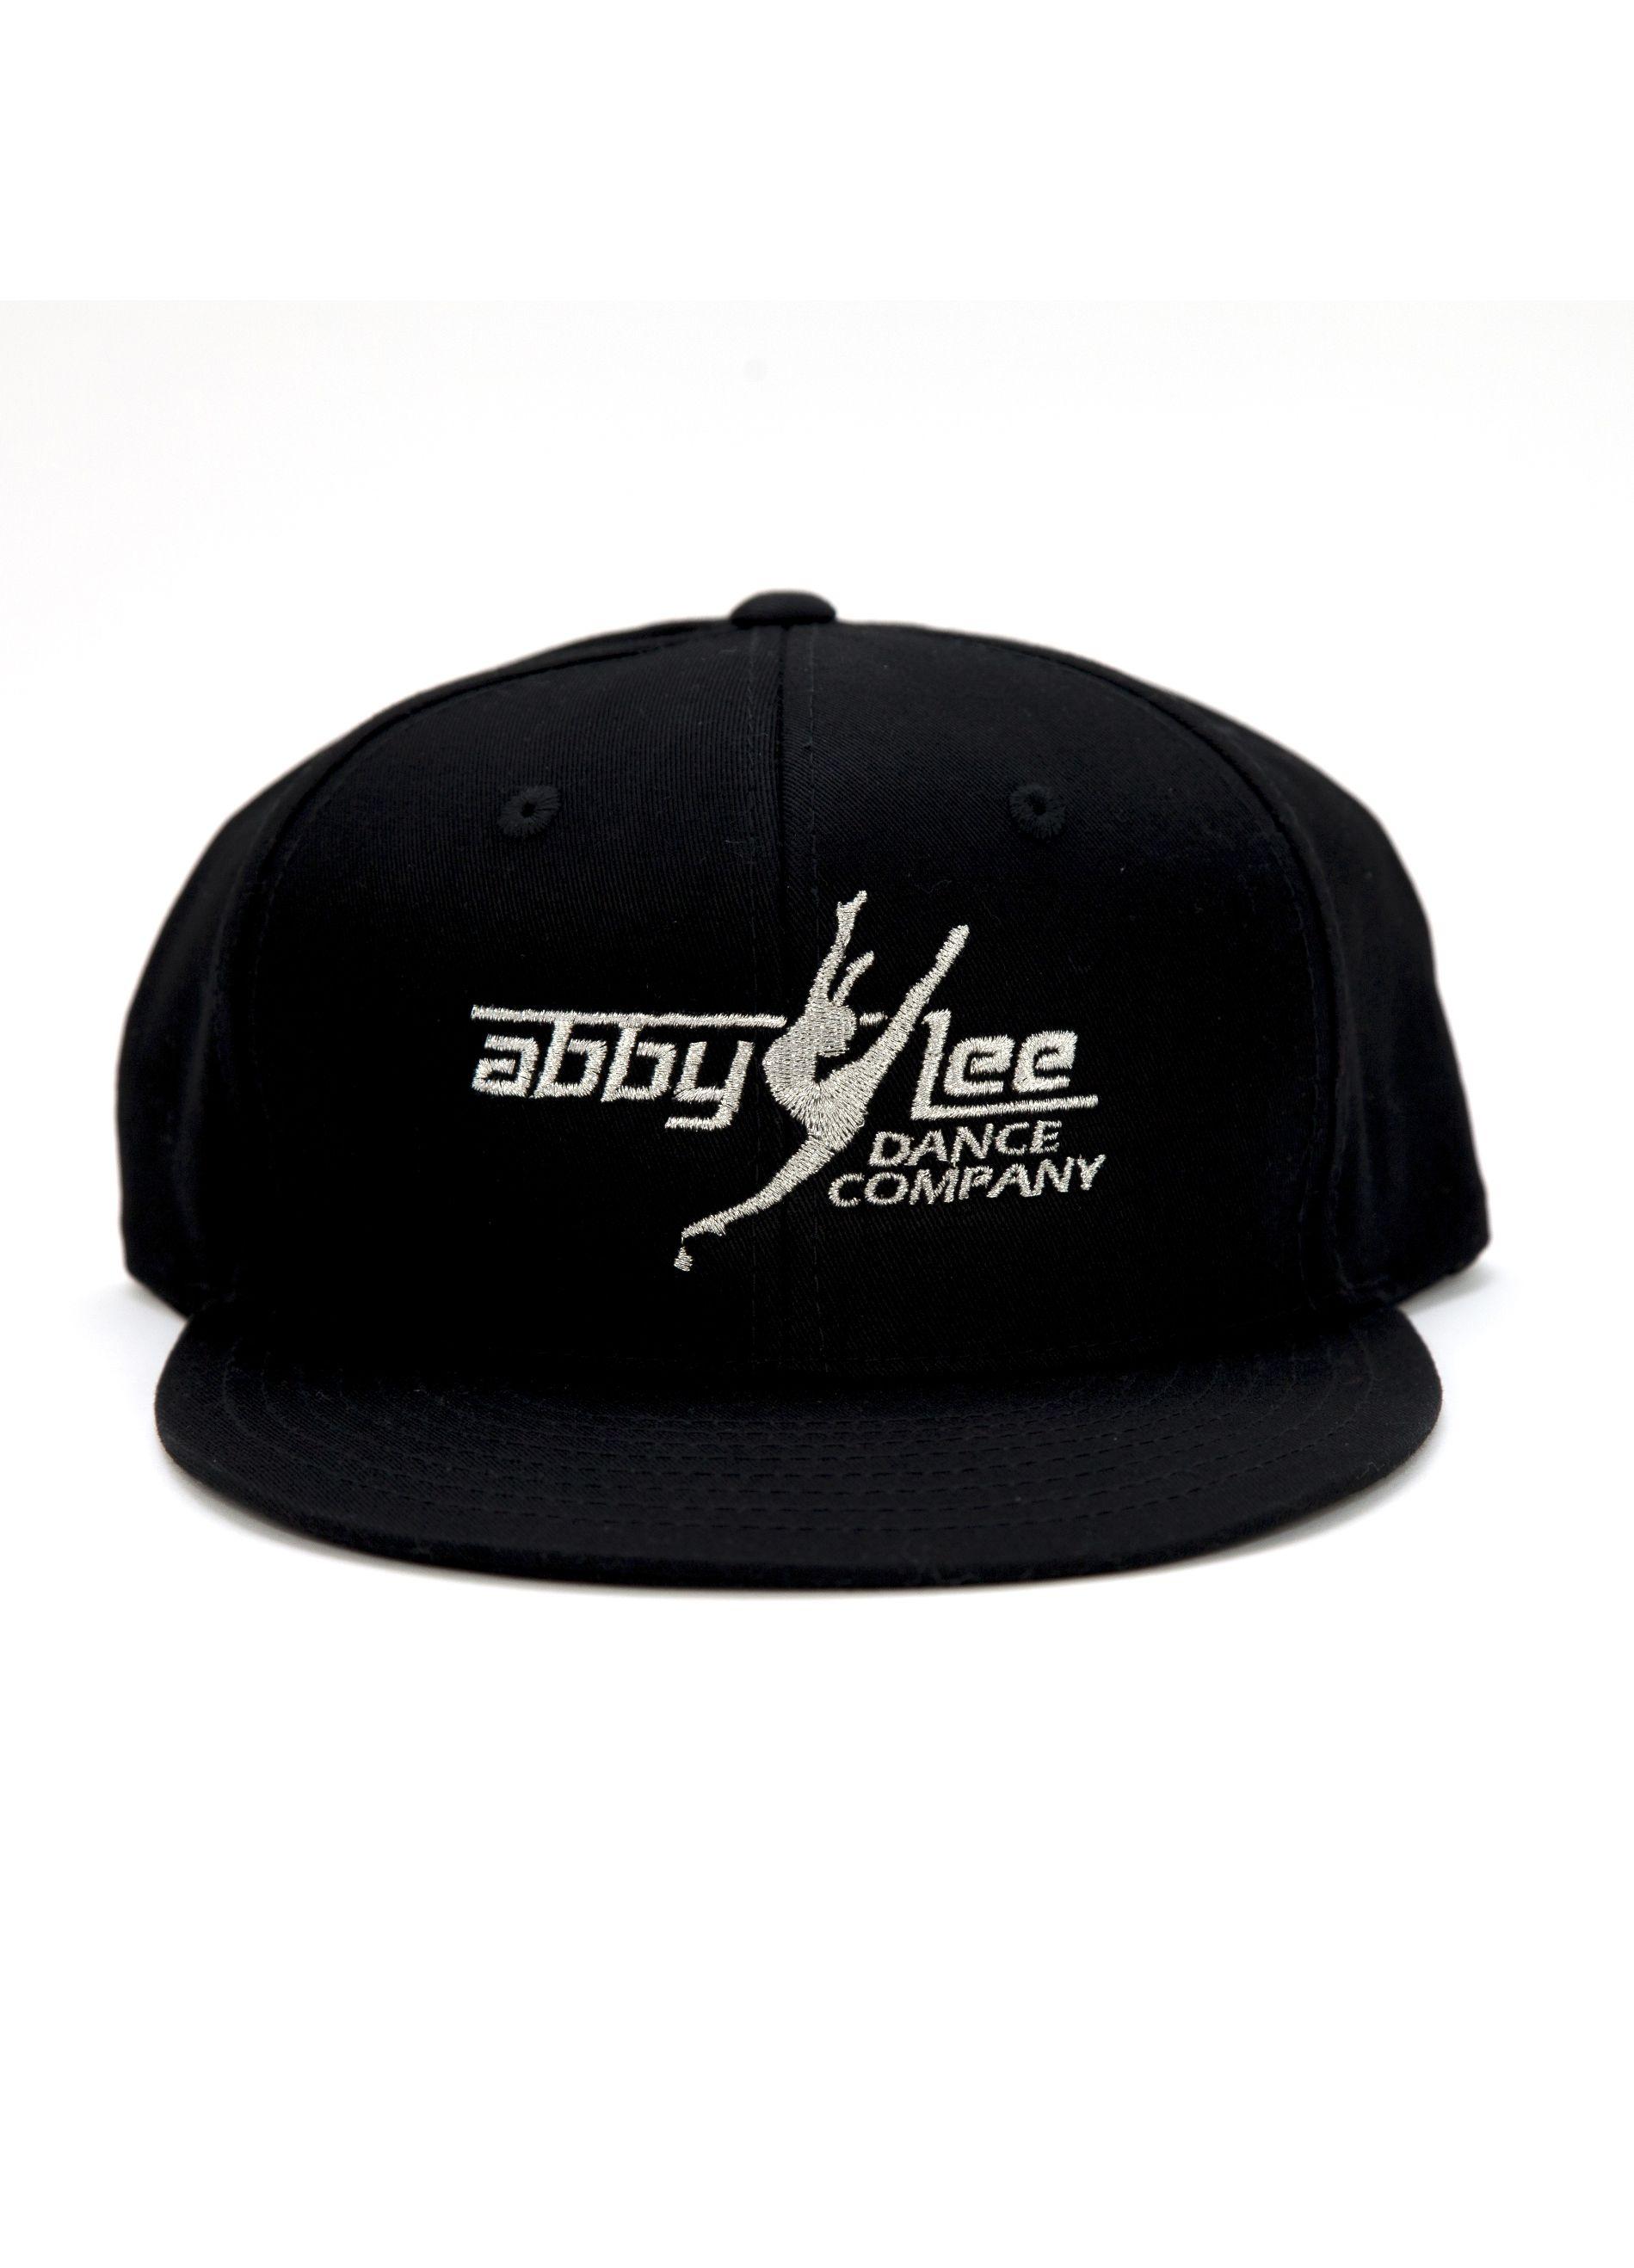 ALDC Logo - Black Hat with Silver Abby Lee Dance Co. Logo | ALDC